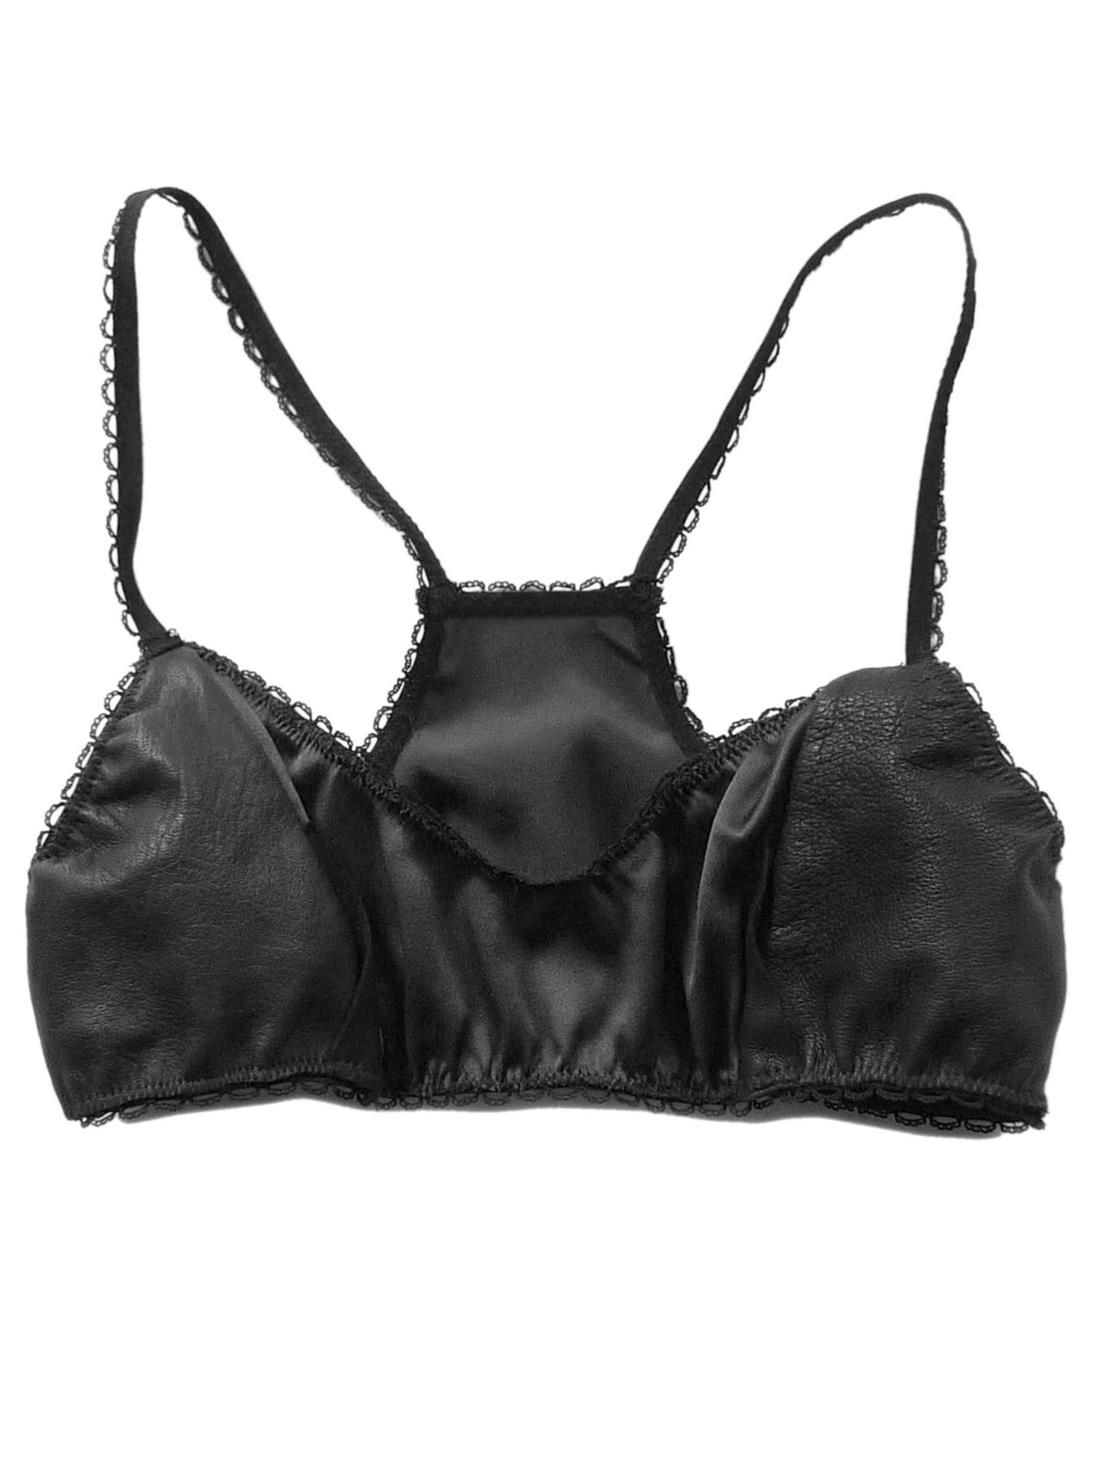 http://shophasana.co.uk/wp-content/uploads/2014/06/C740B-leather-silk-bra-black.jpg